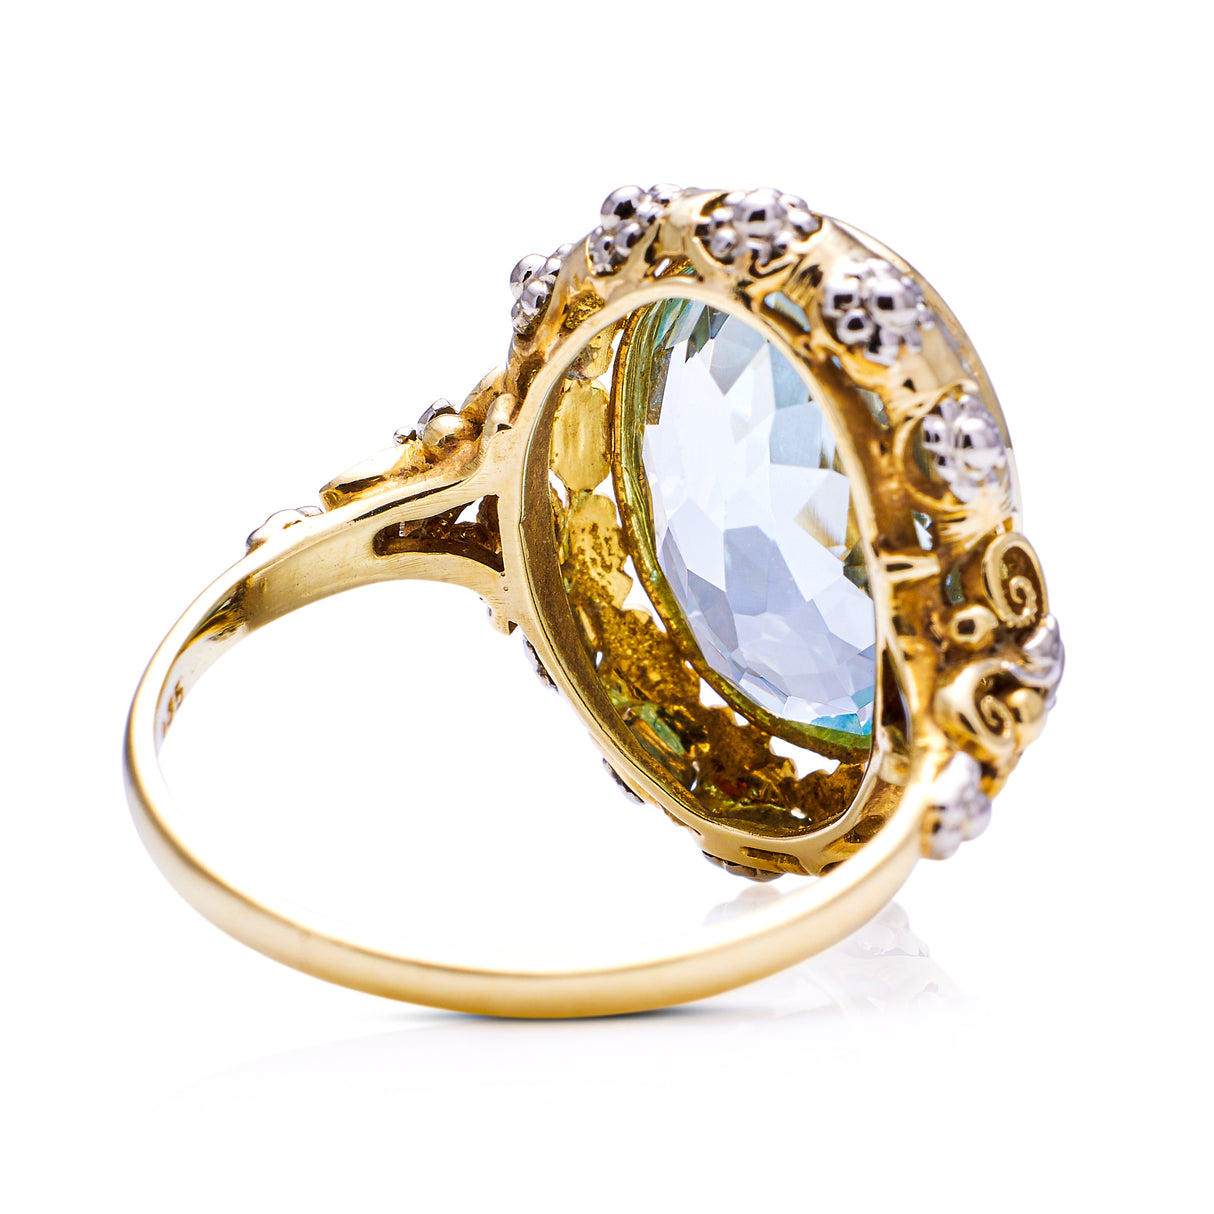 Antique, sea-green aquamarine ring 14ct yellow gold, intricate mount